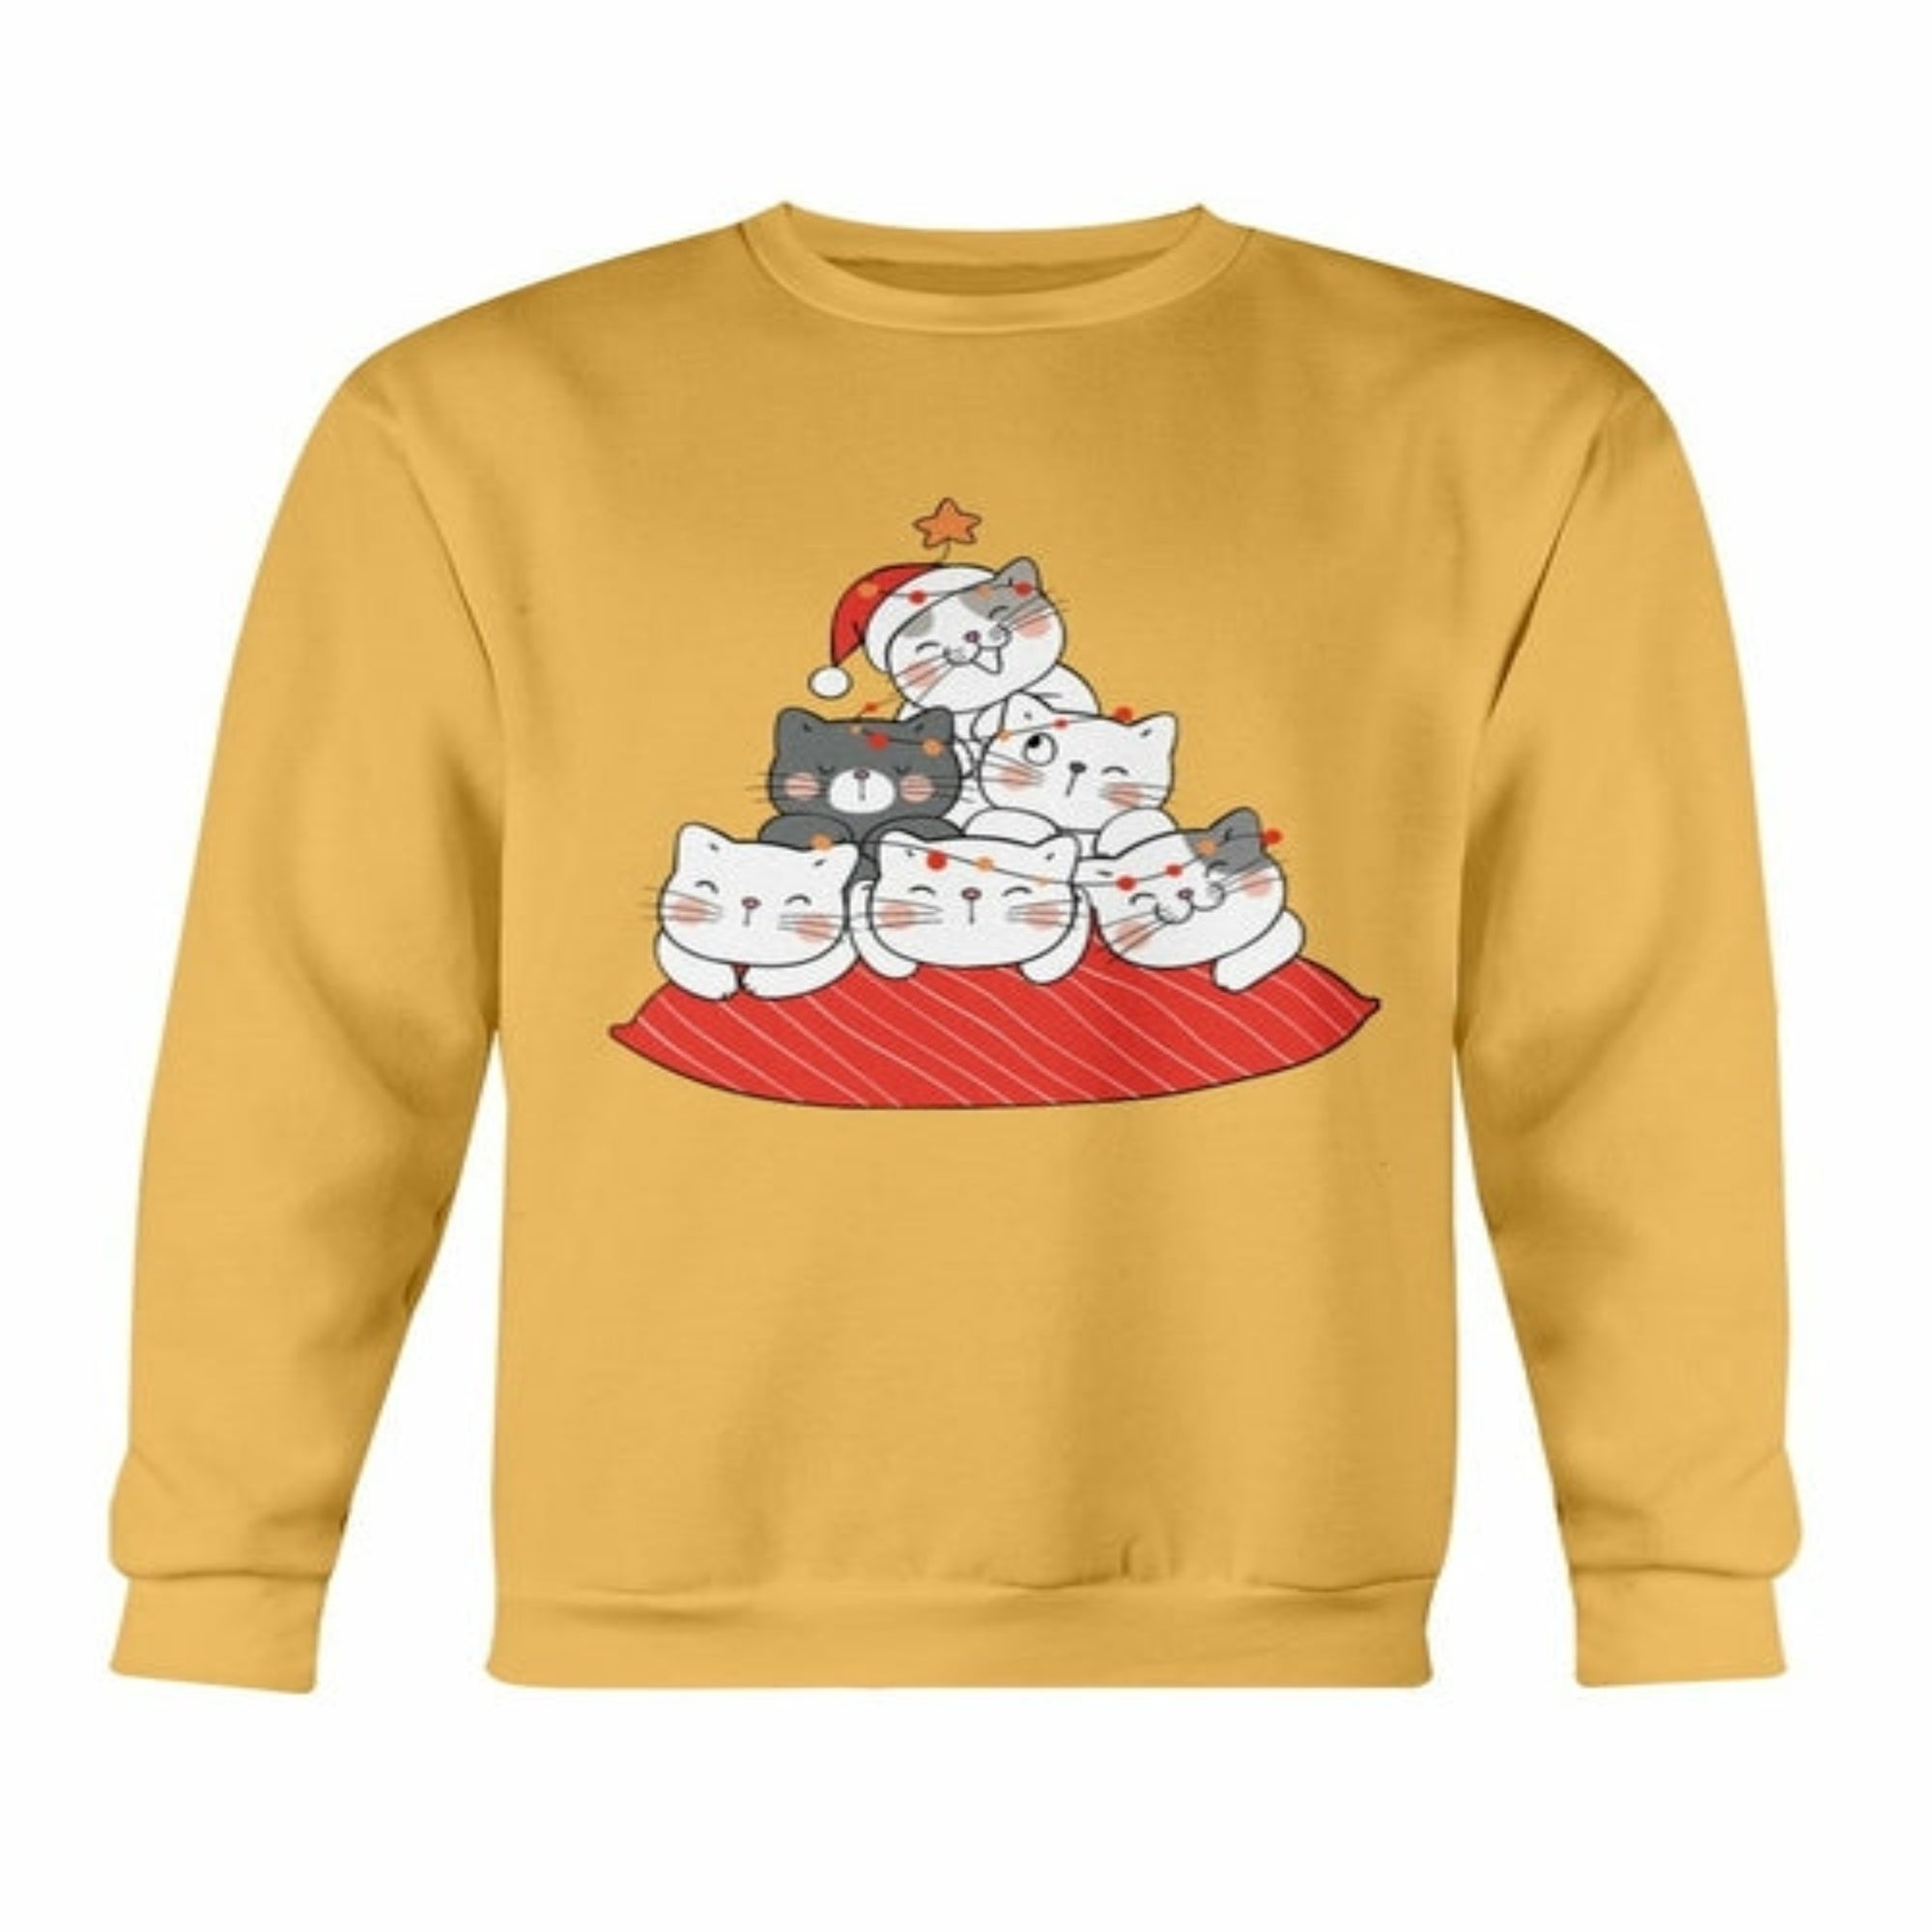 Cute Cushion Cats Christmas Sweatshirt